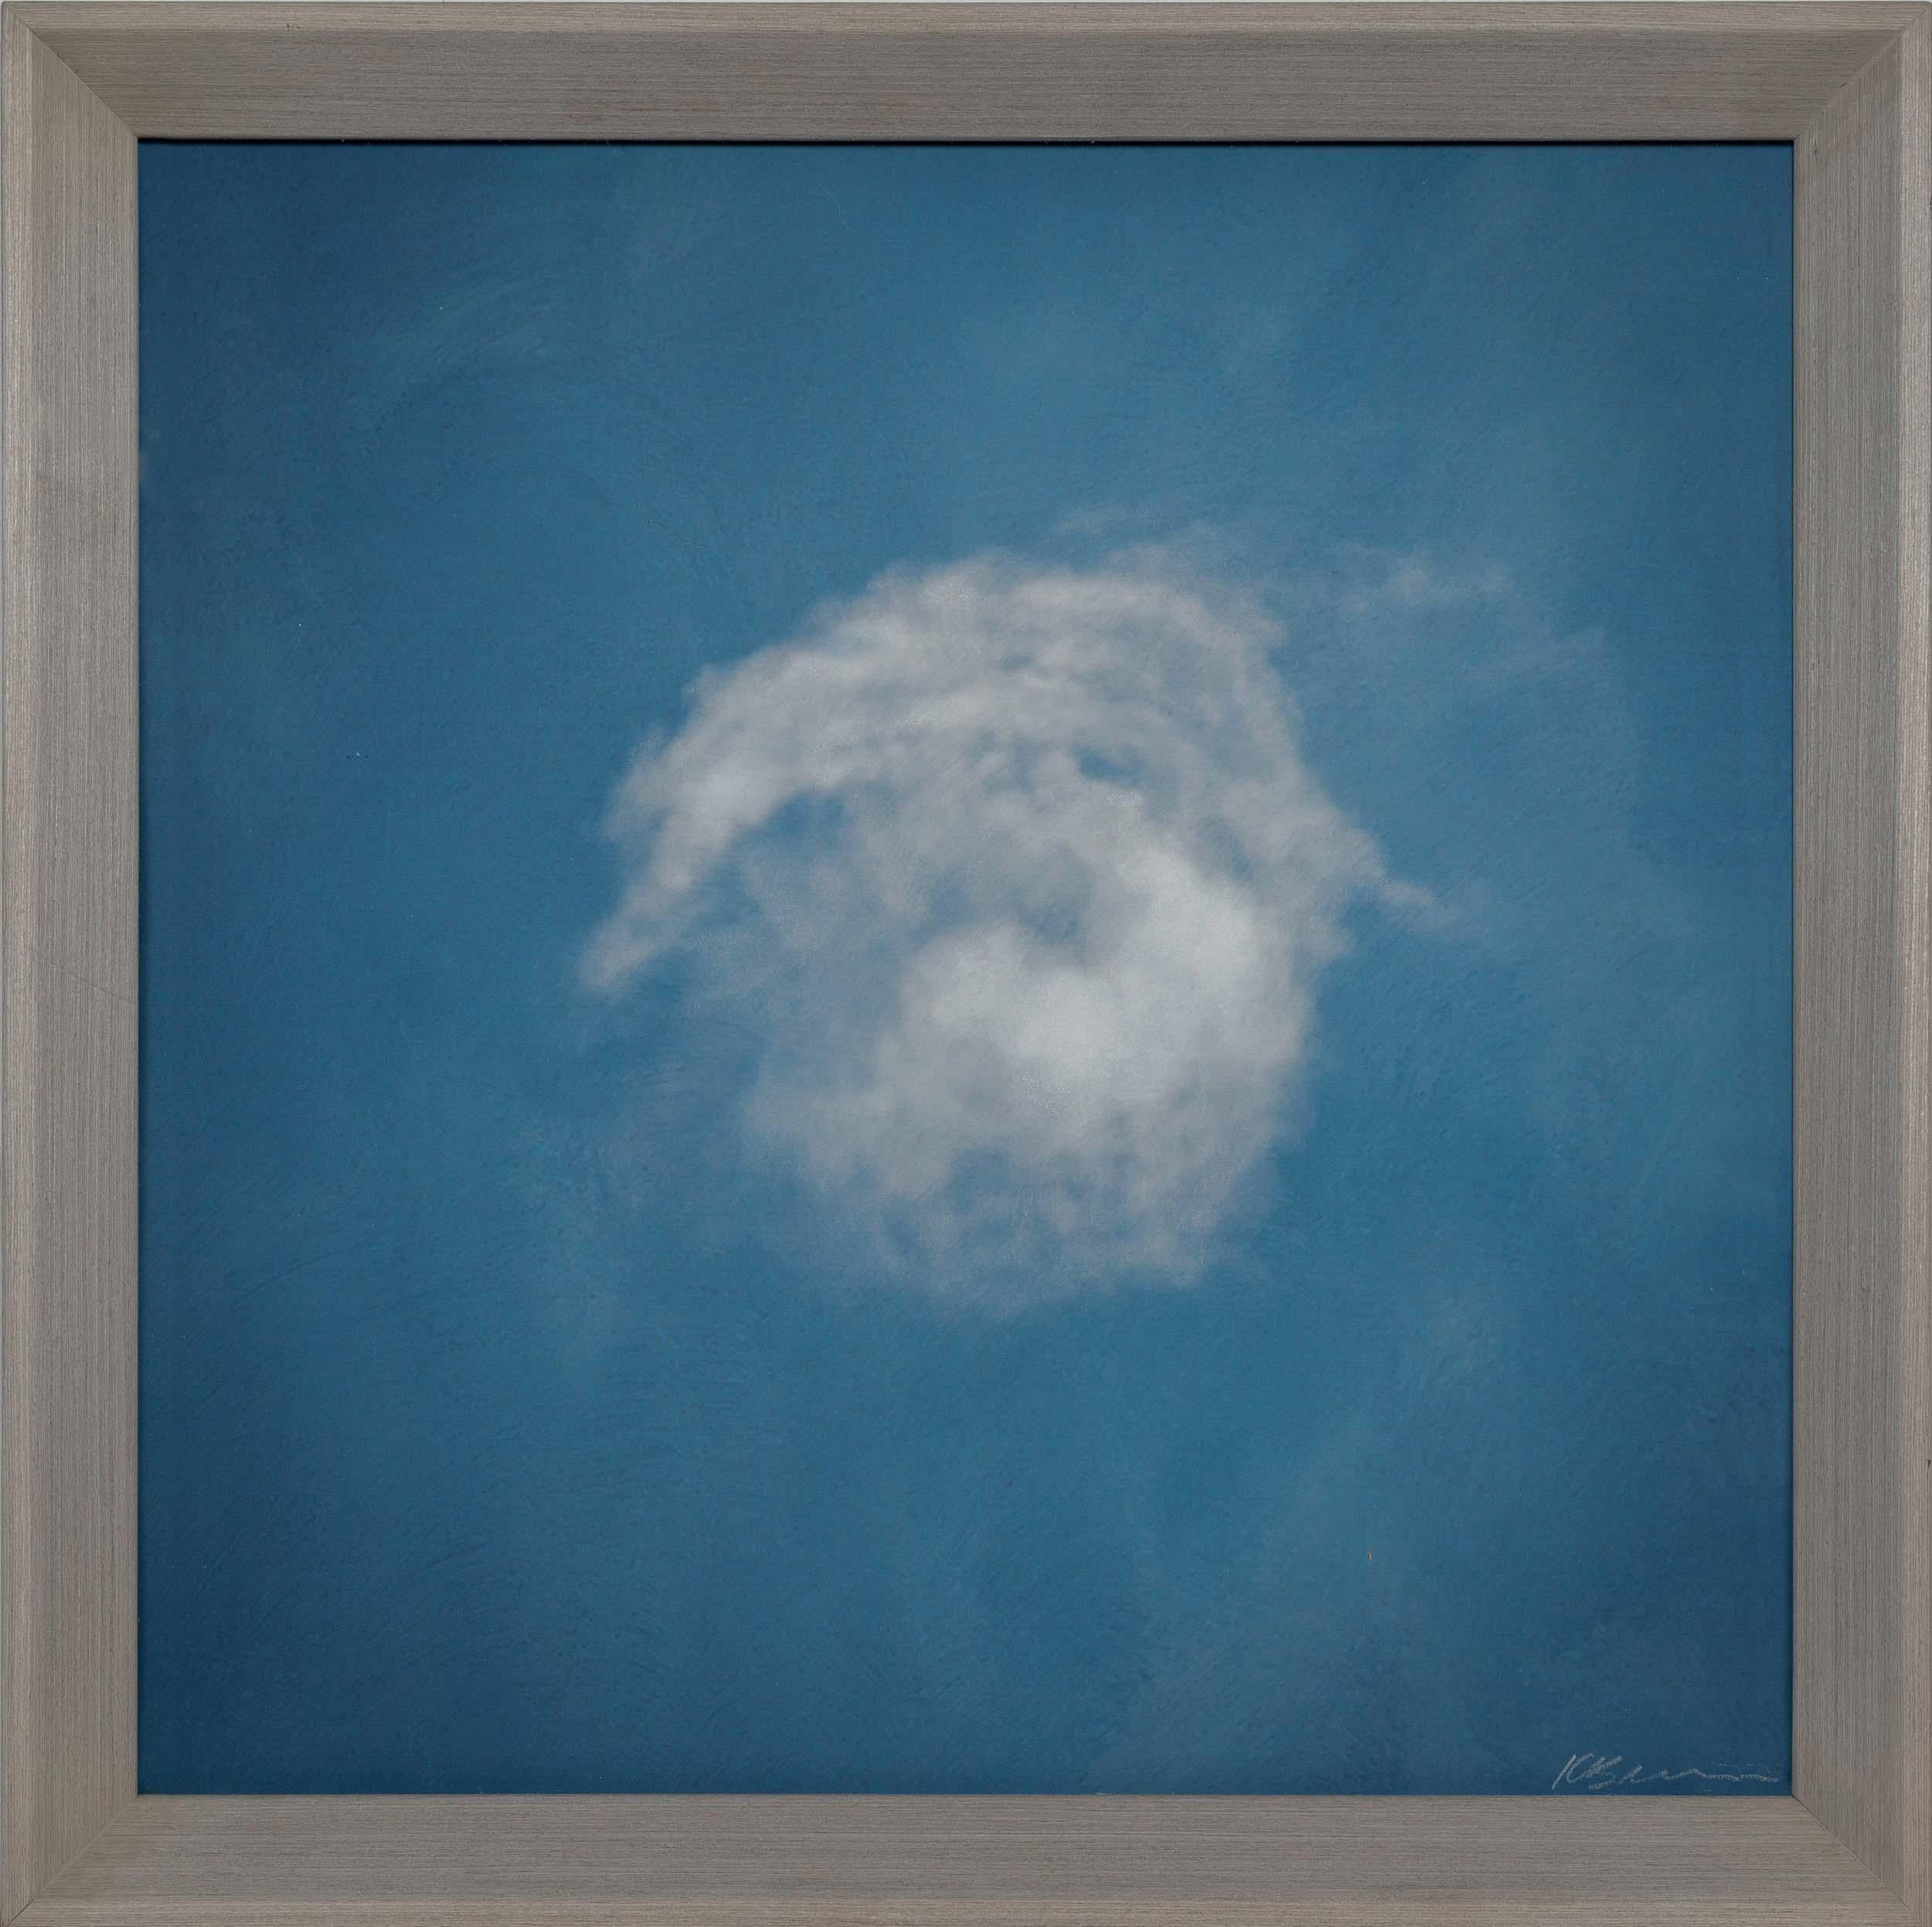 Kate Breakey Landscape Photograph - Twelve Clouds, Softly, Slowly (I)